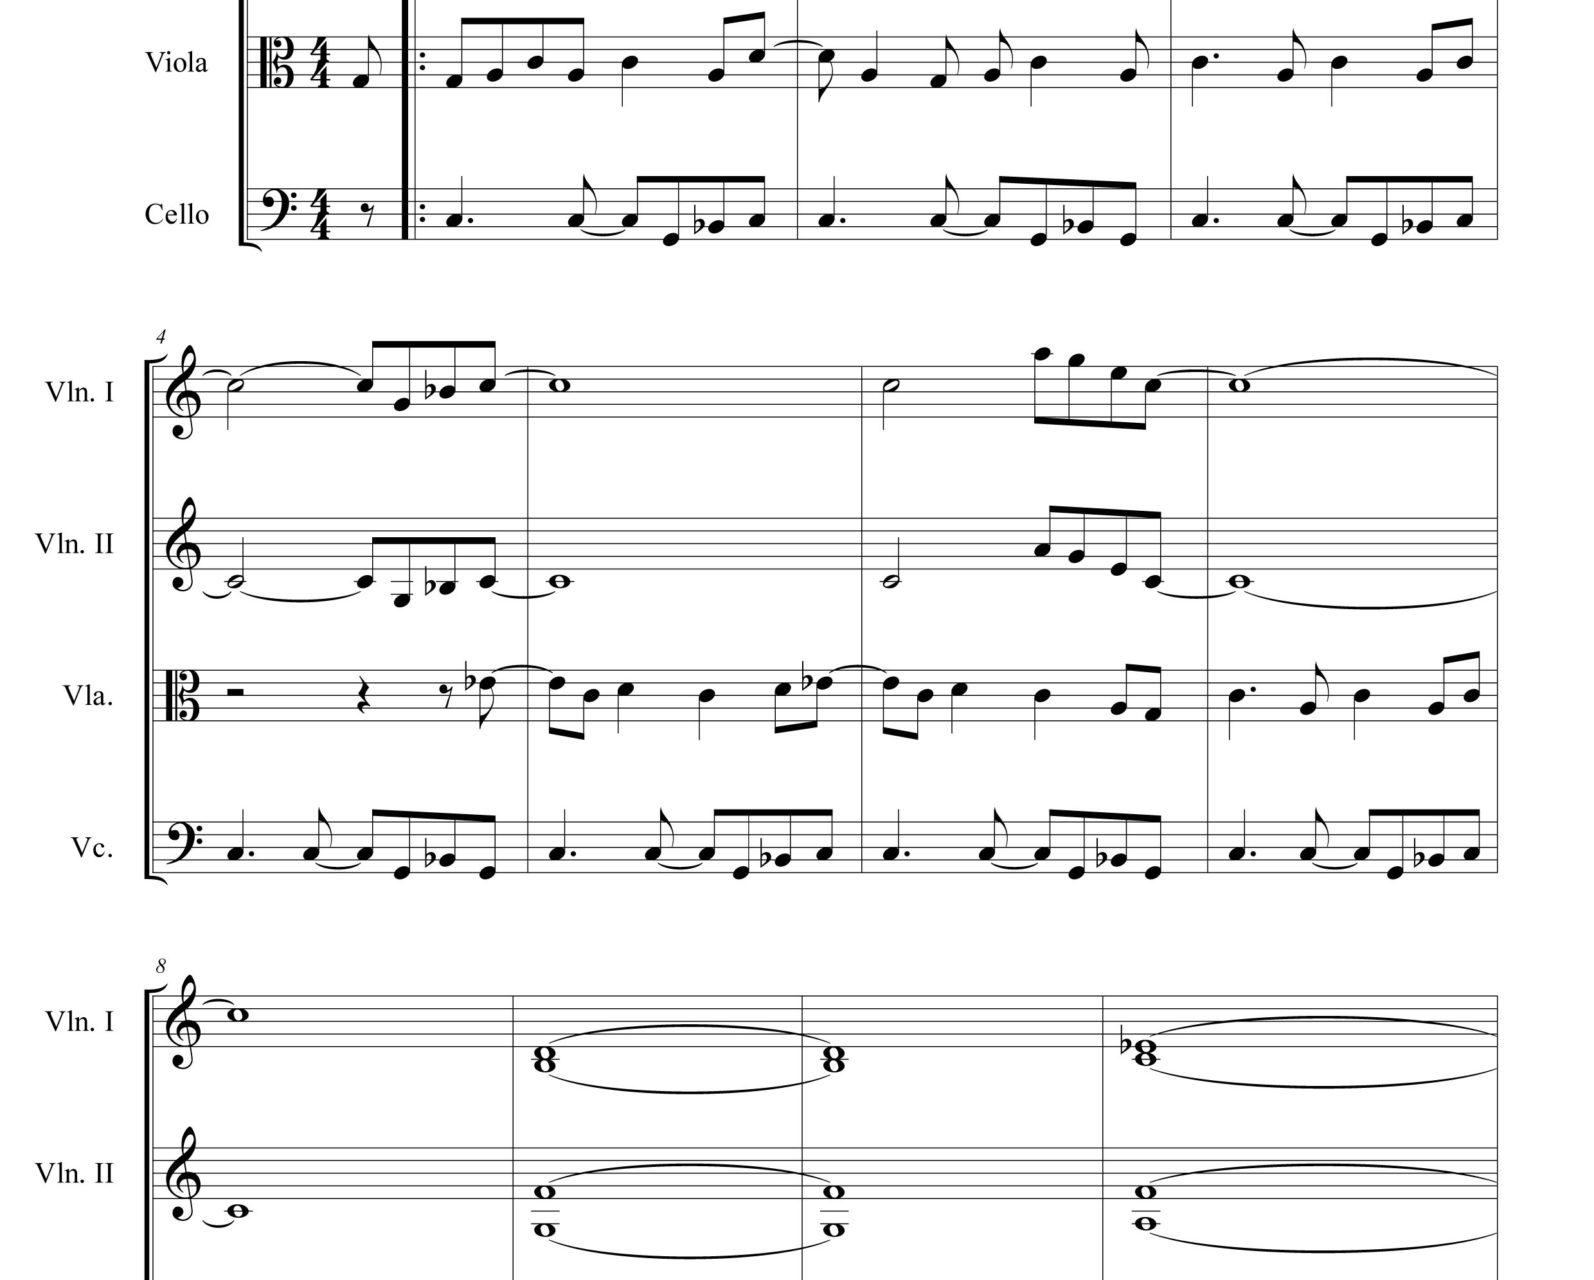 Back To Black by Amy Winehouse - String Quartet - Digital Sheet Music